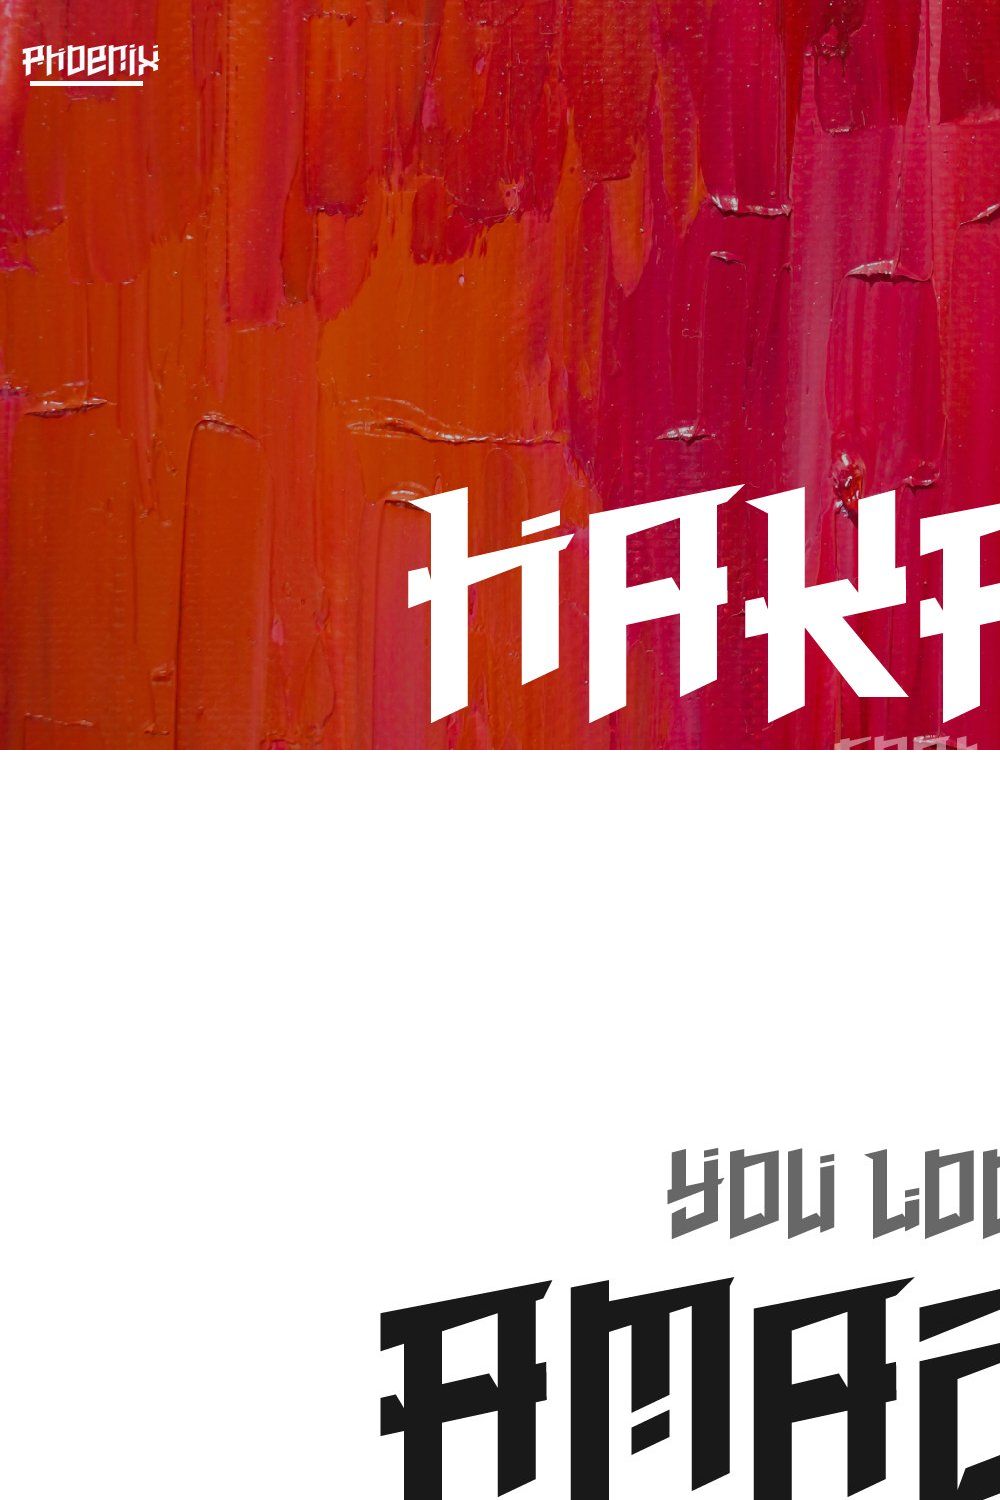 Hakaze Font pinterest preview image.